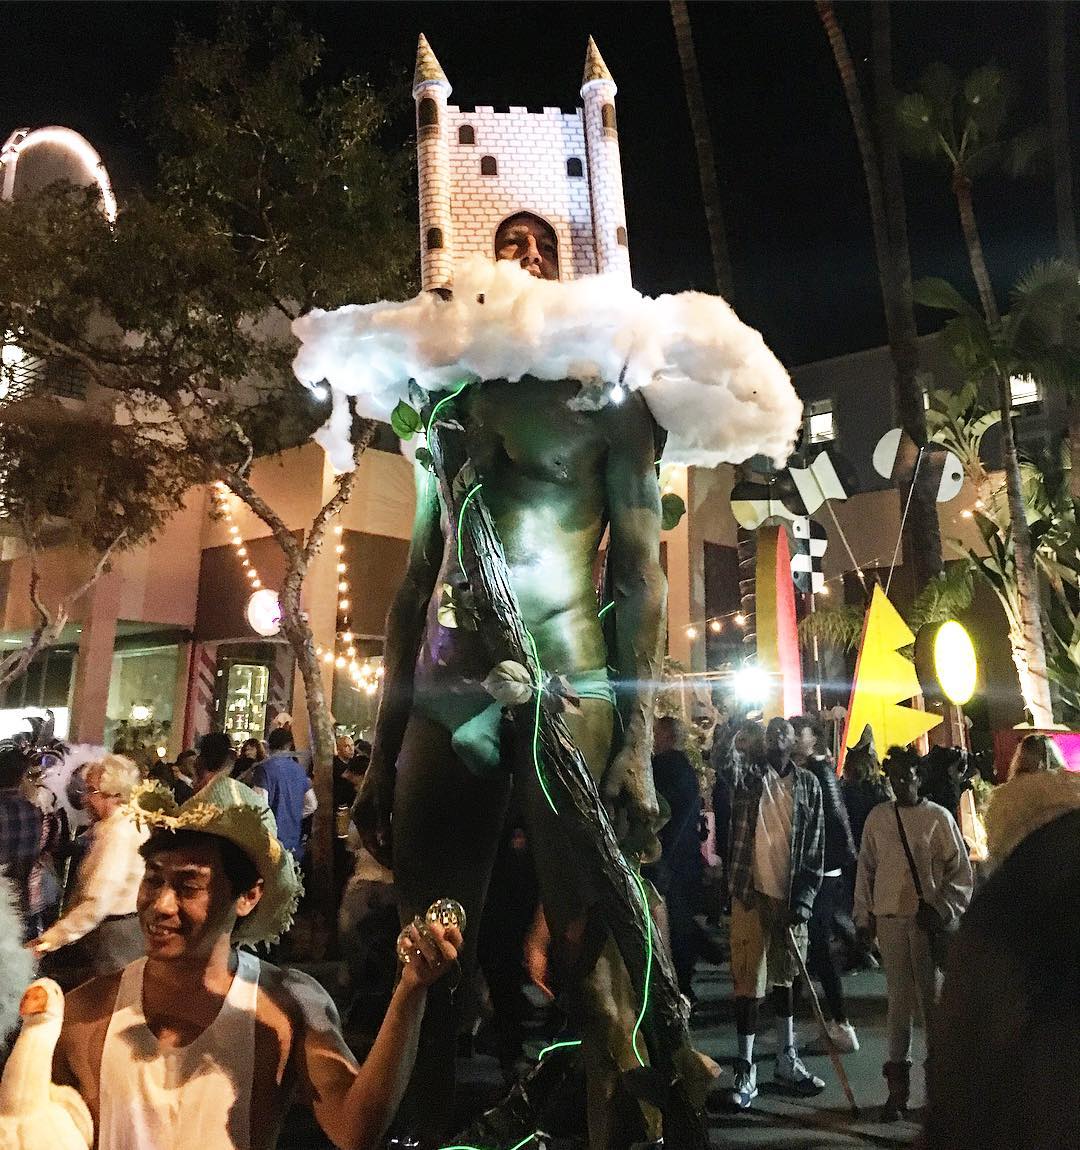 11 Ways to Celebrate Halloween - West Hollywood Halloween Costume Carnaval 